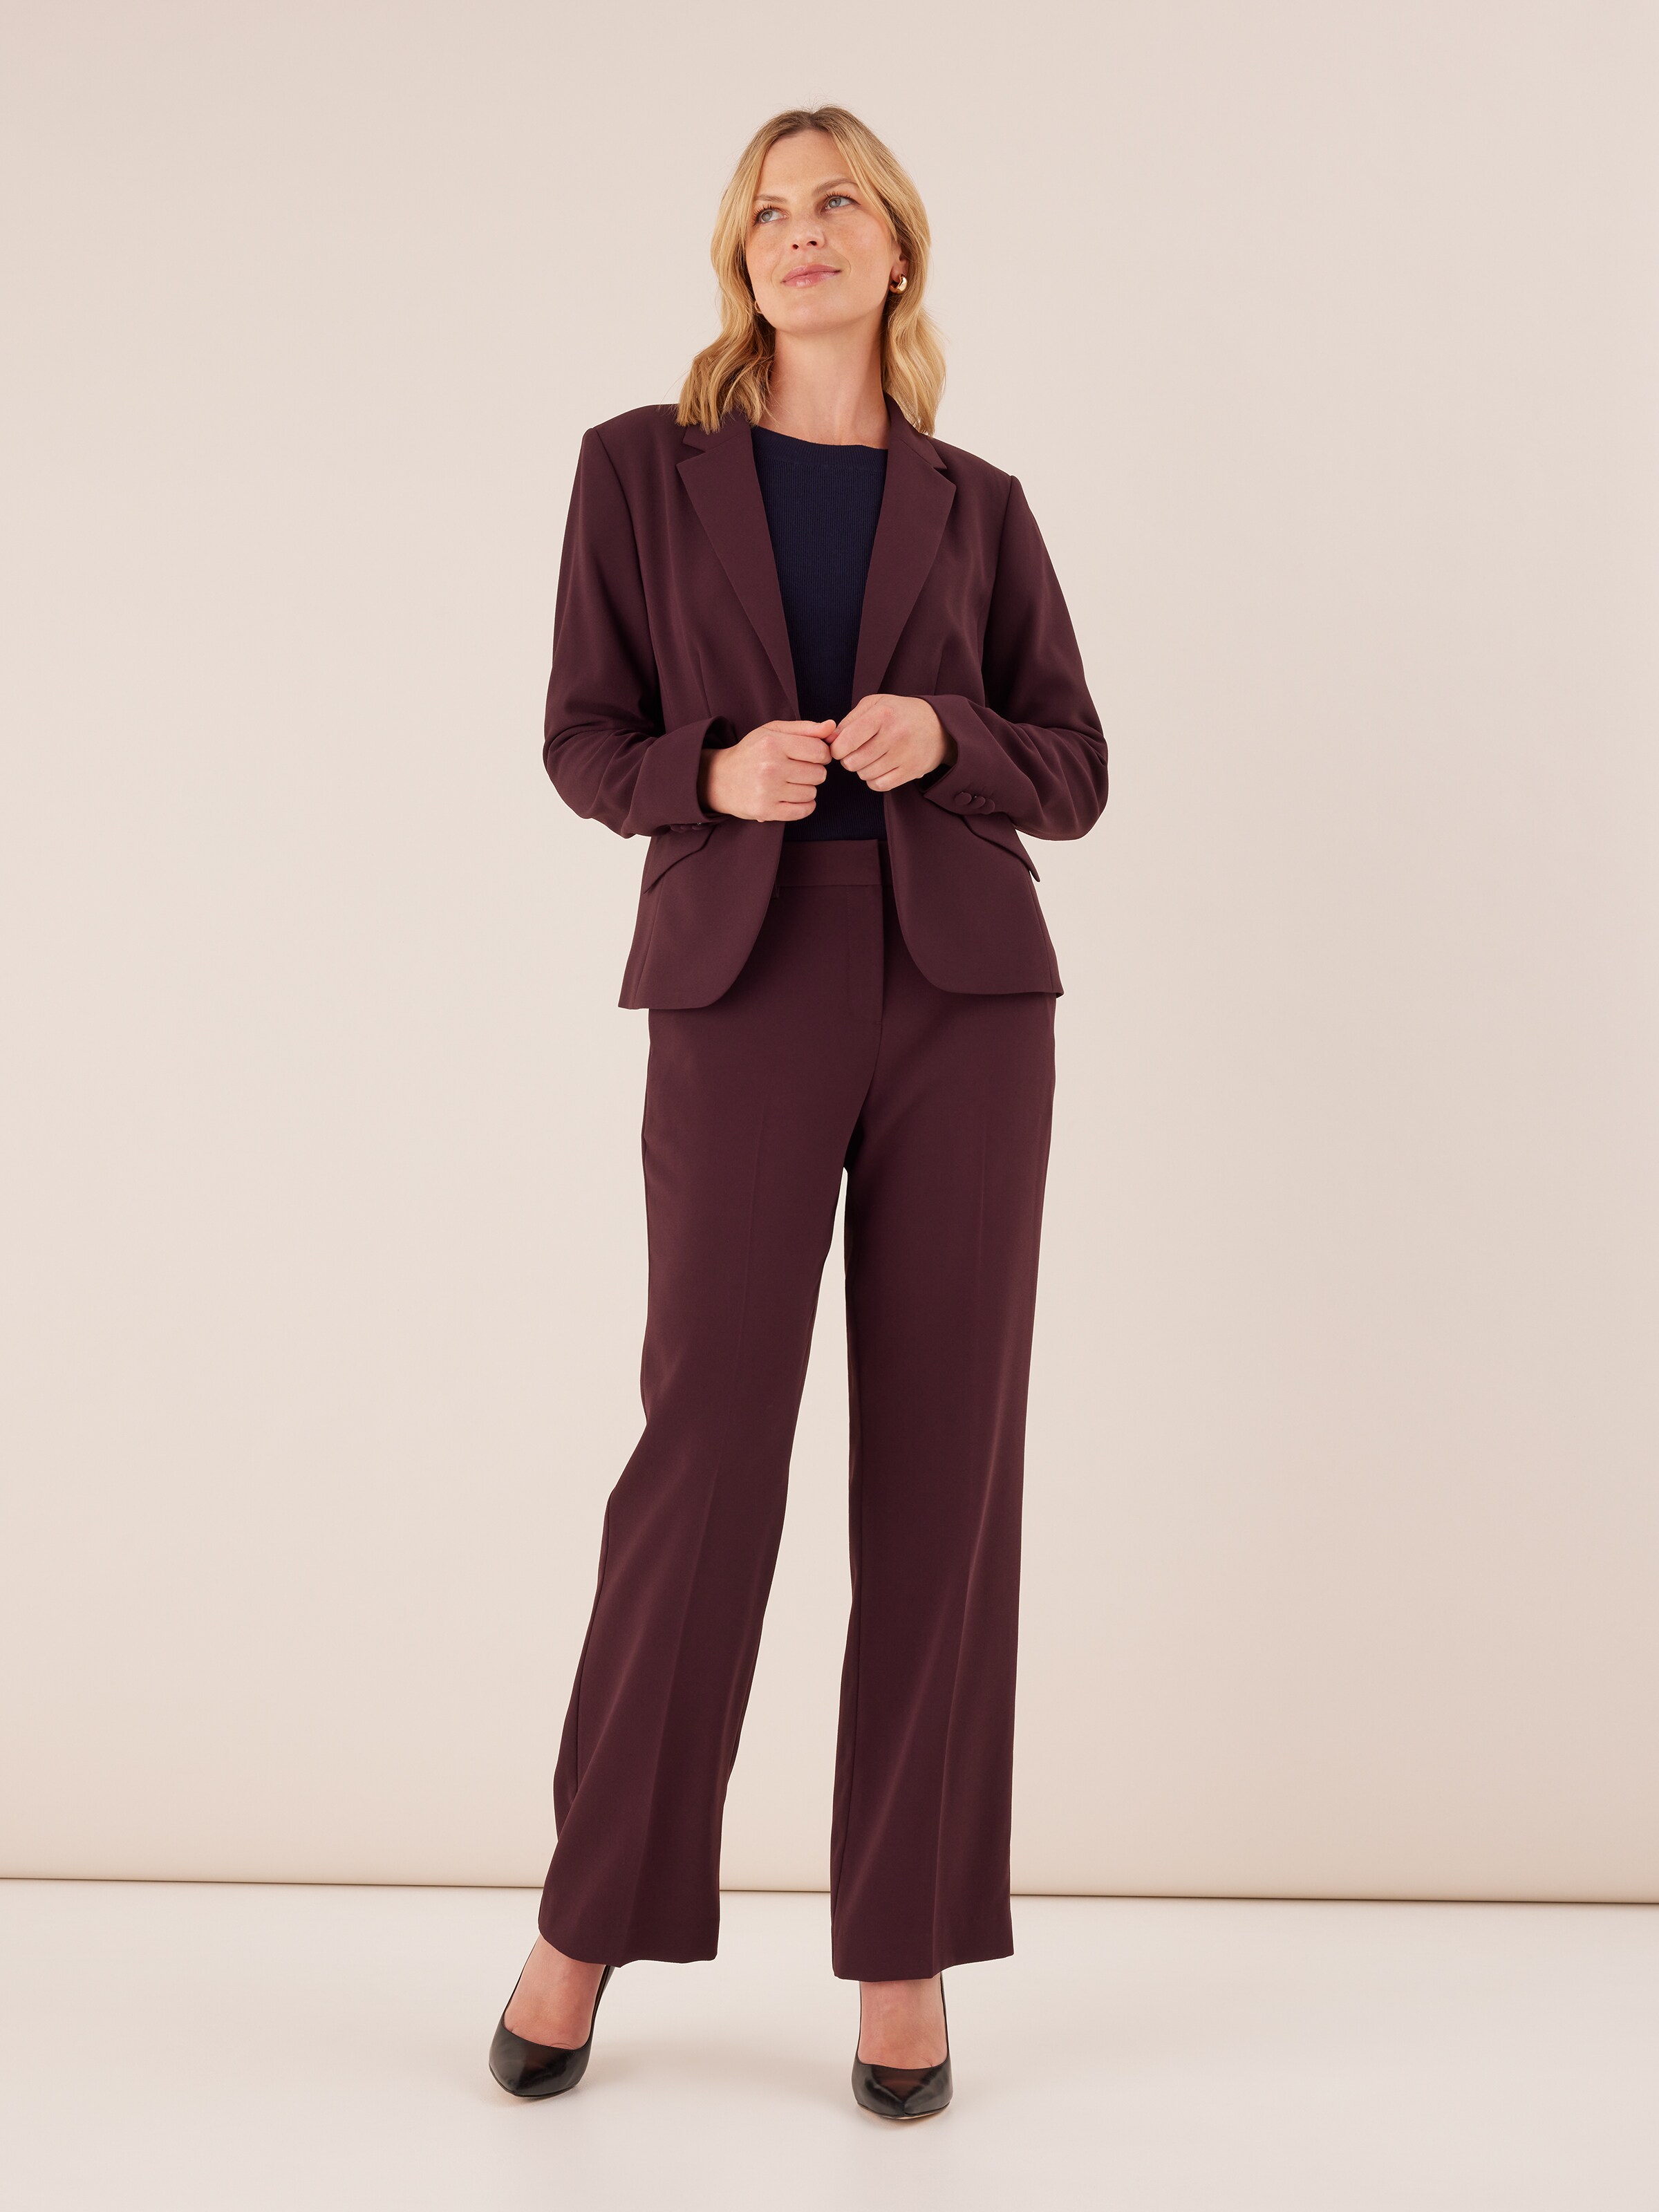 Women's Suits - Pant Suits for Women